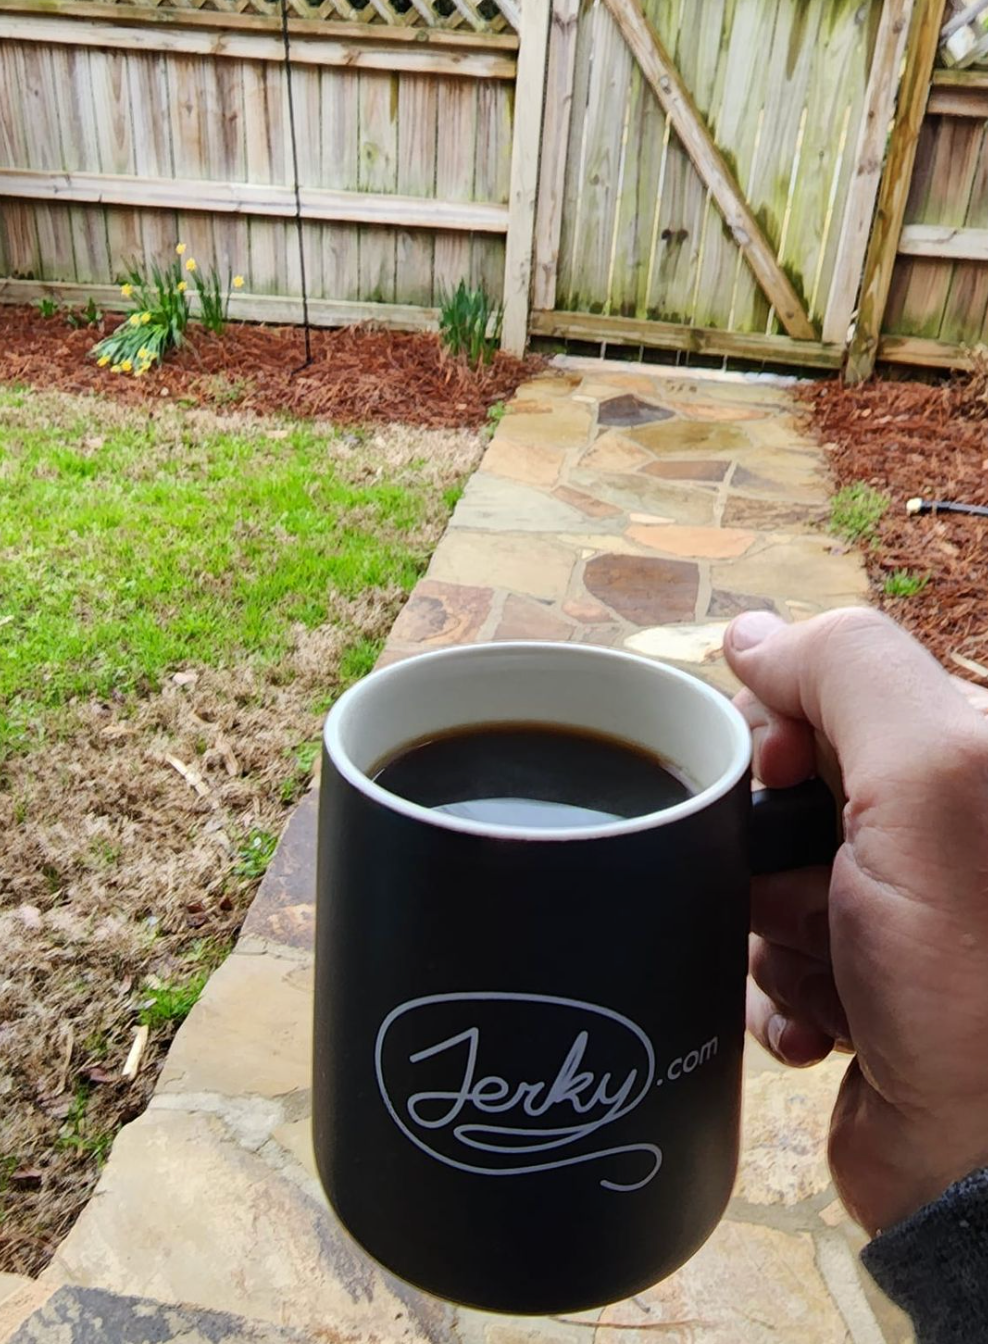 Jerky.com Coffee Mug by Jerky.com